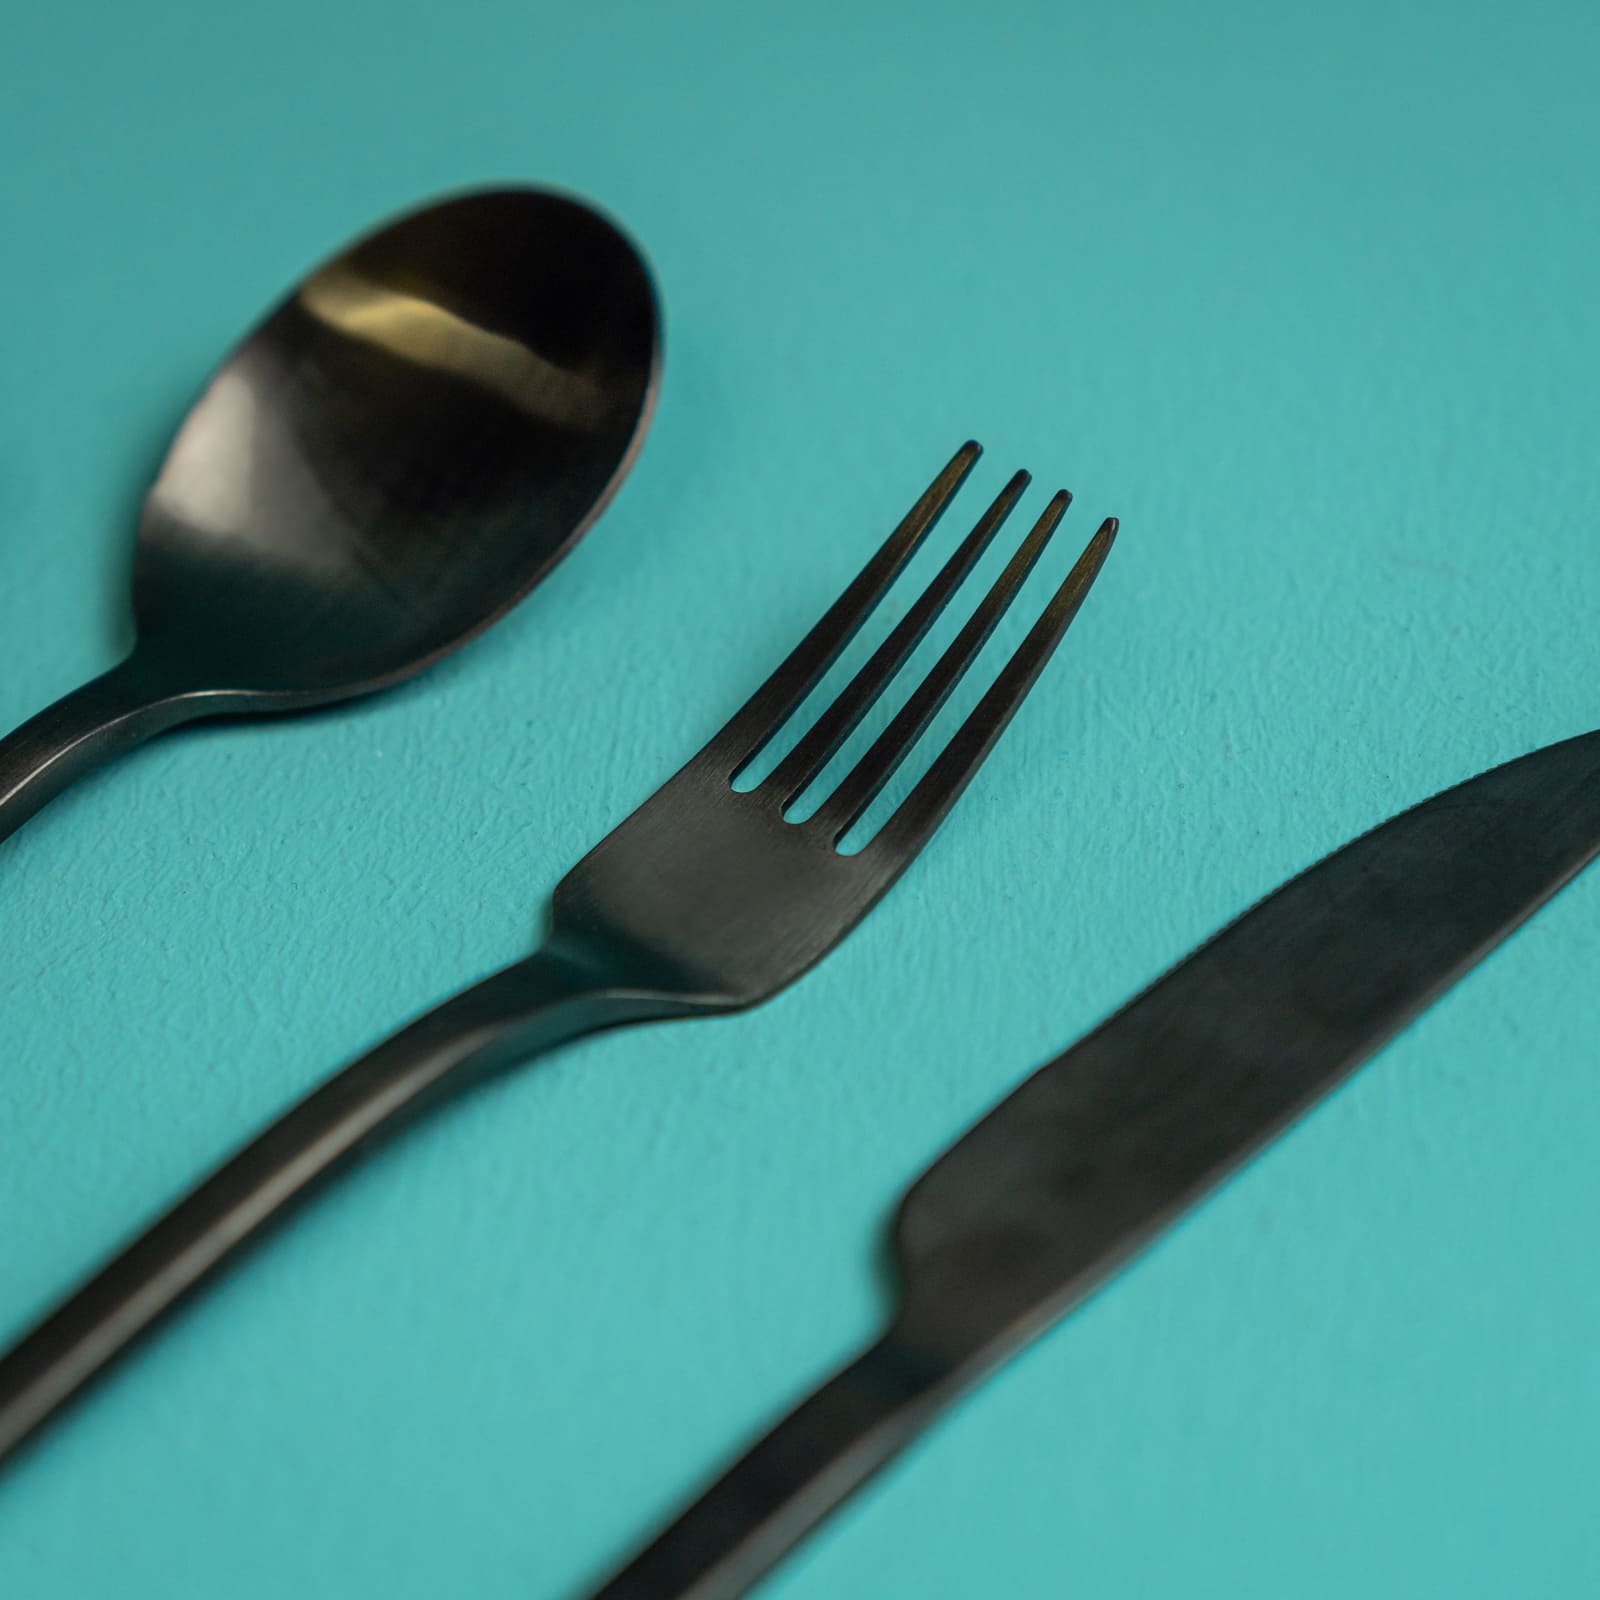 4-piece cutlery set Black Cutlery